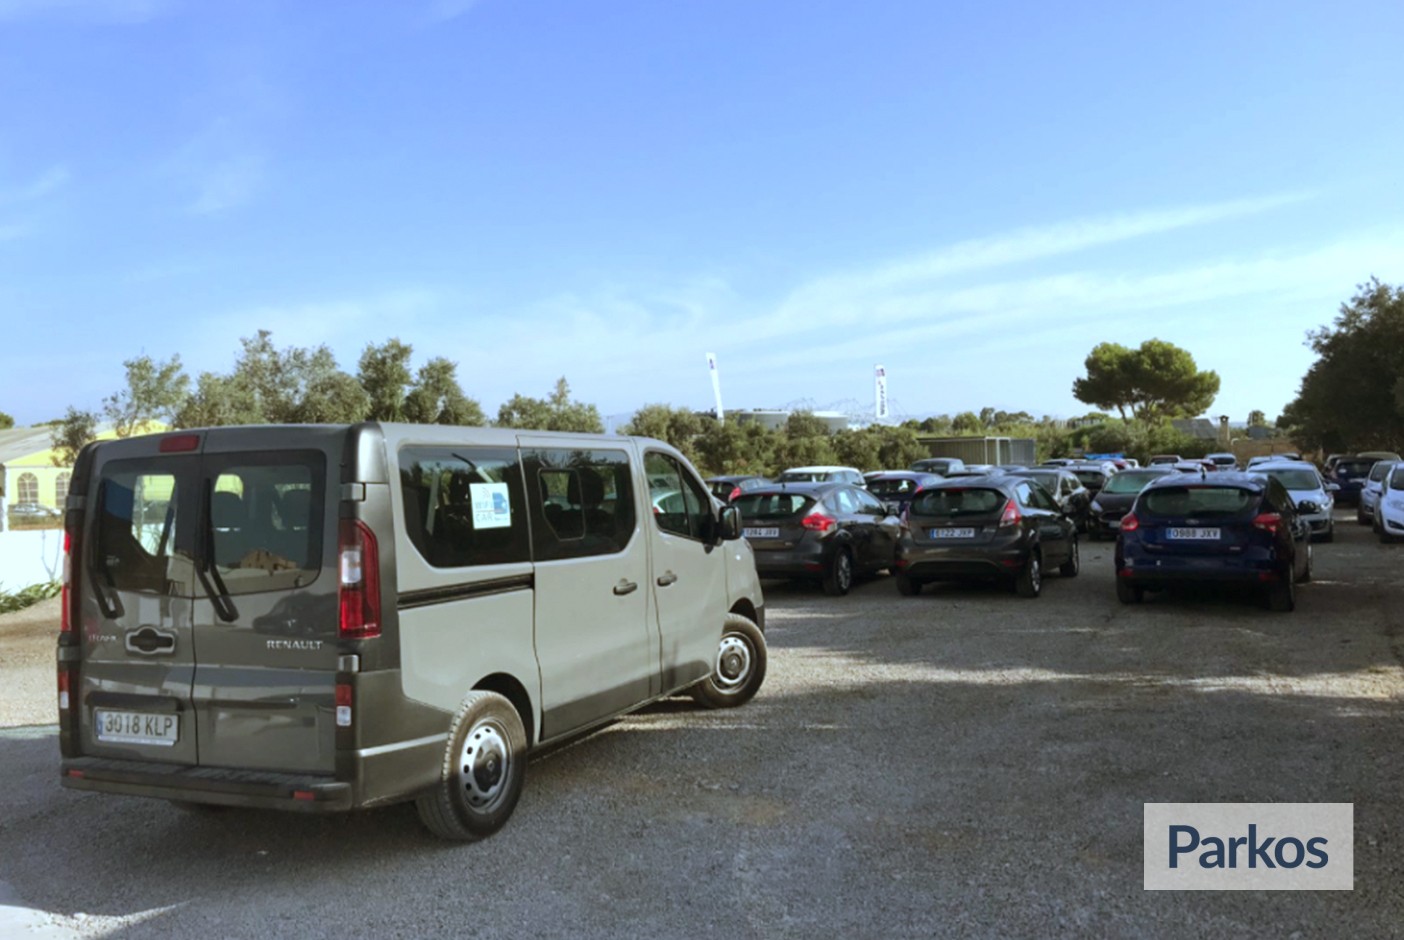 Wifi Park Mallorca (Paga online) - Parking Aeropuerto Palma de Mallorca - picture 1